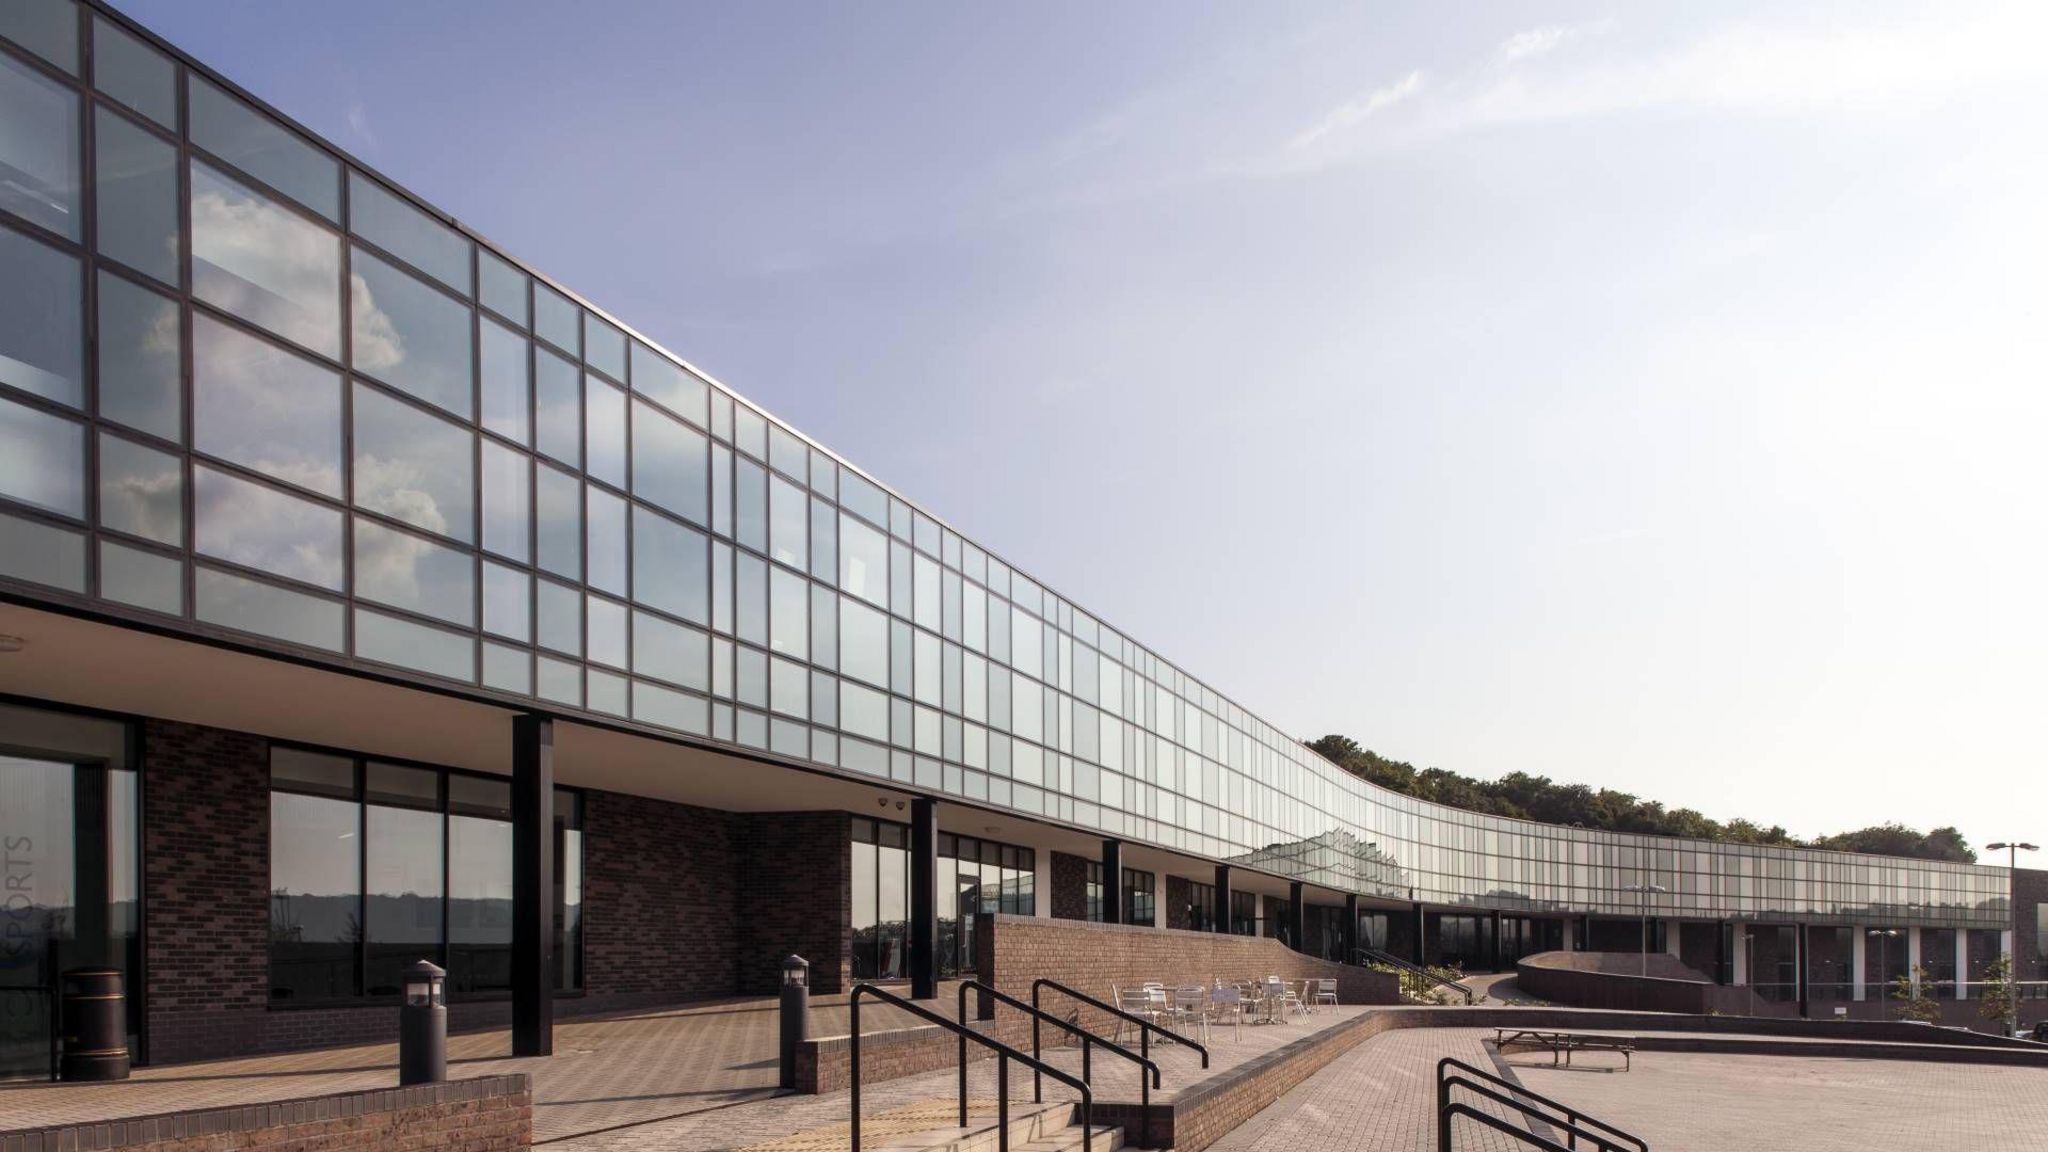 Brighton Aldridge Community Academy school building - a long, thin, glass build